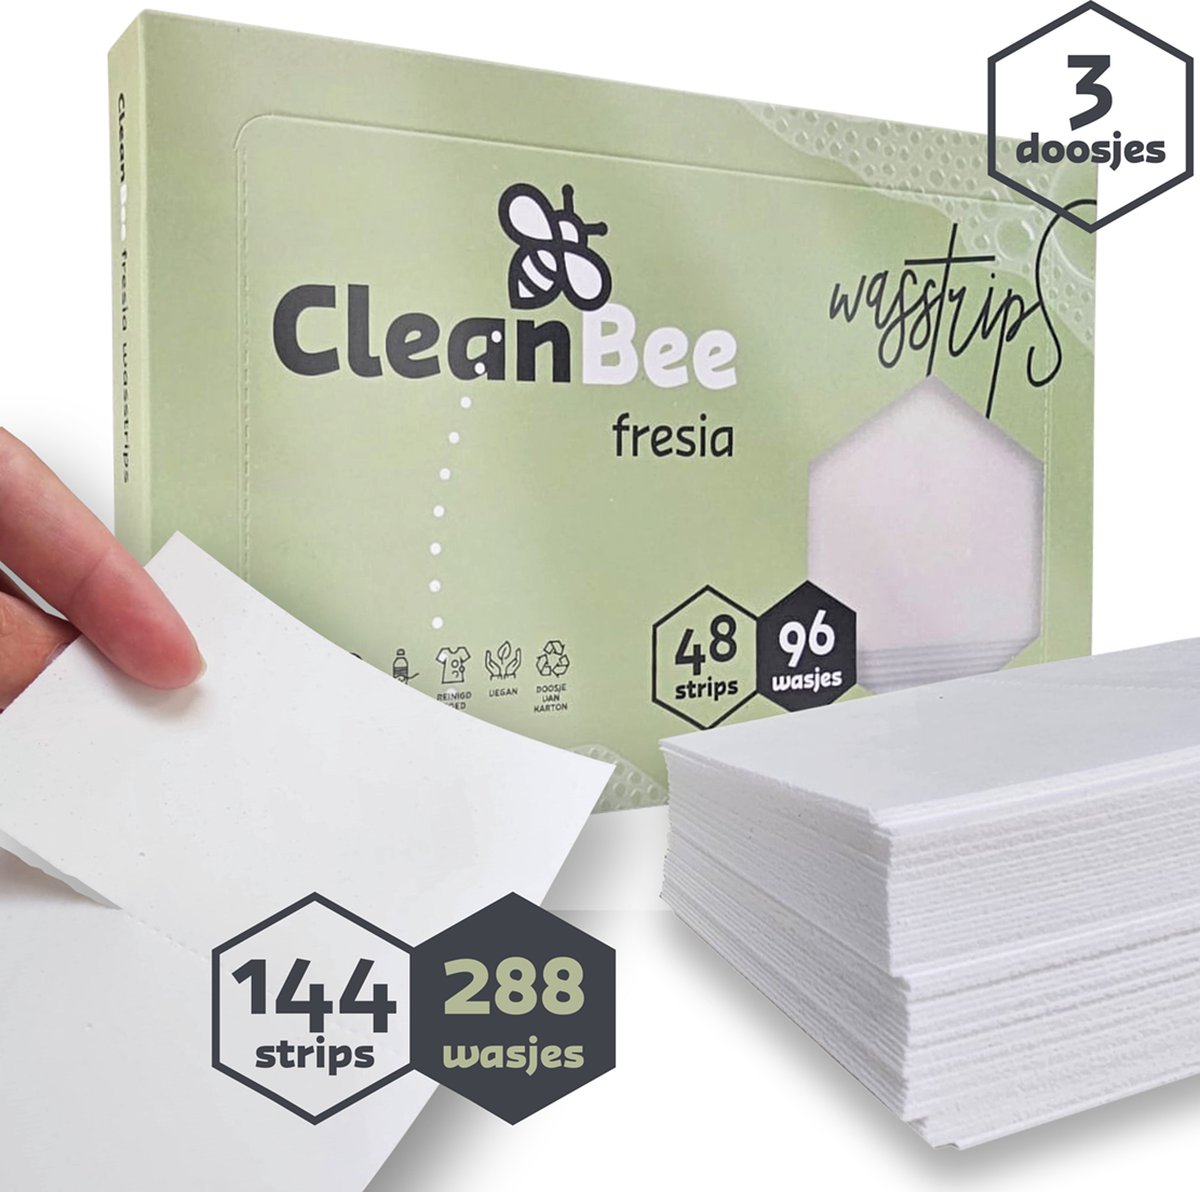 CleanBee® Wasstrips 288 Wasbeurten Fresia - Wasmiddeldoekjes - Wasstrips Proefpakket - Wasmiddel - Wasvellen - Detergent Sheets - Eco Laundry Strips - Plasticvrij - Biologisch - Eco Wasstrips